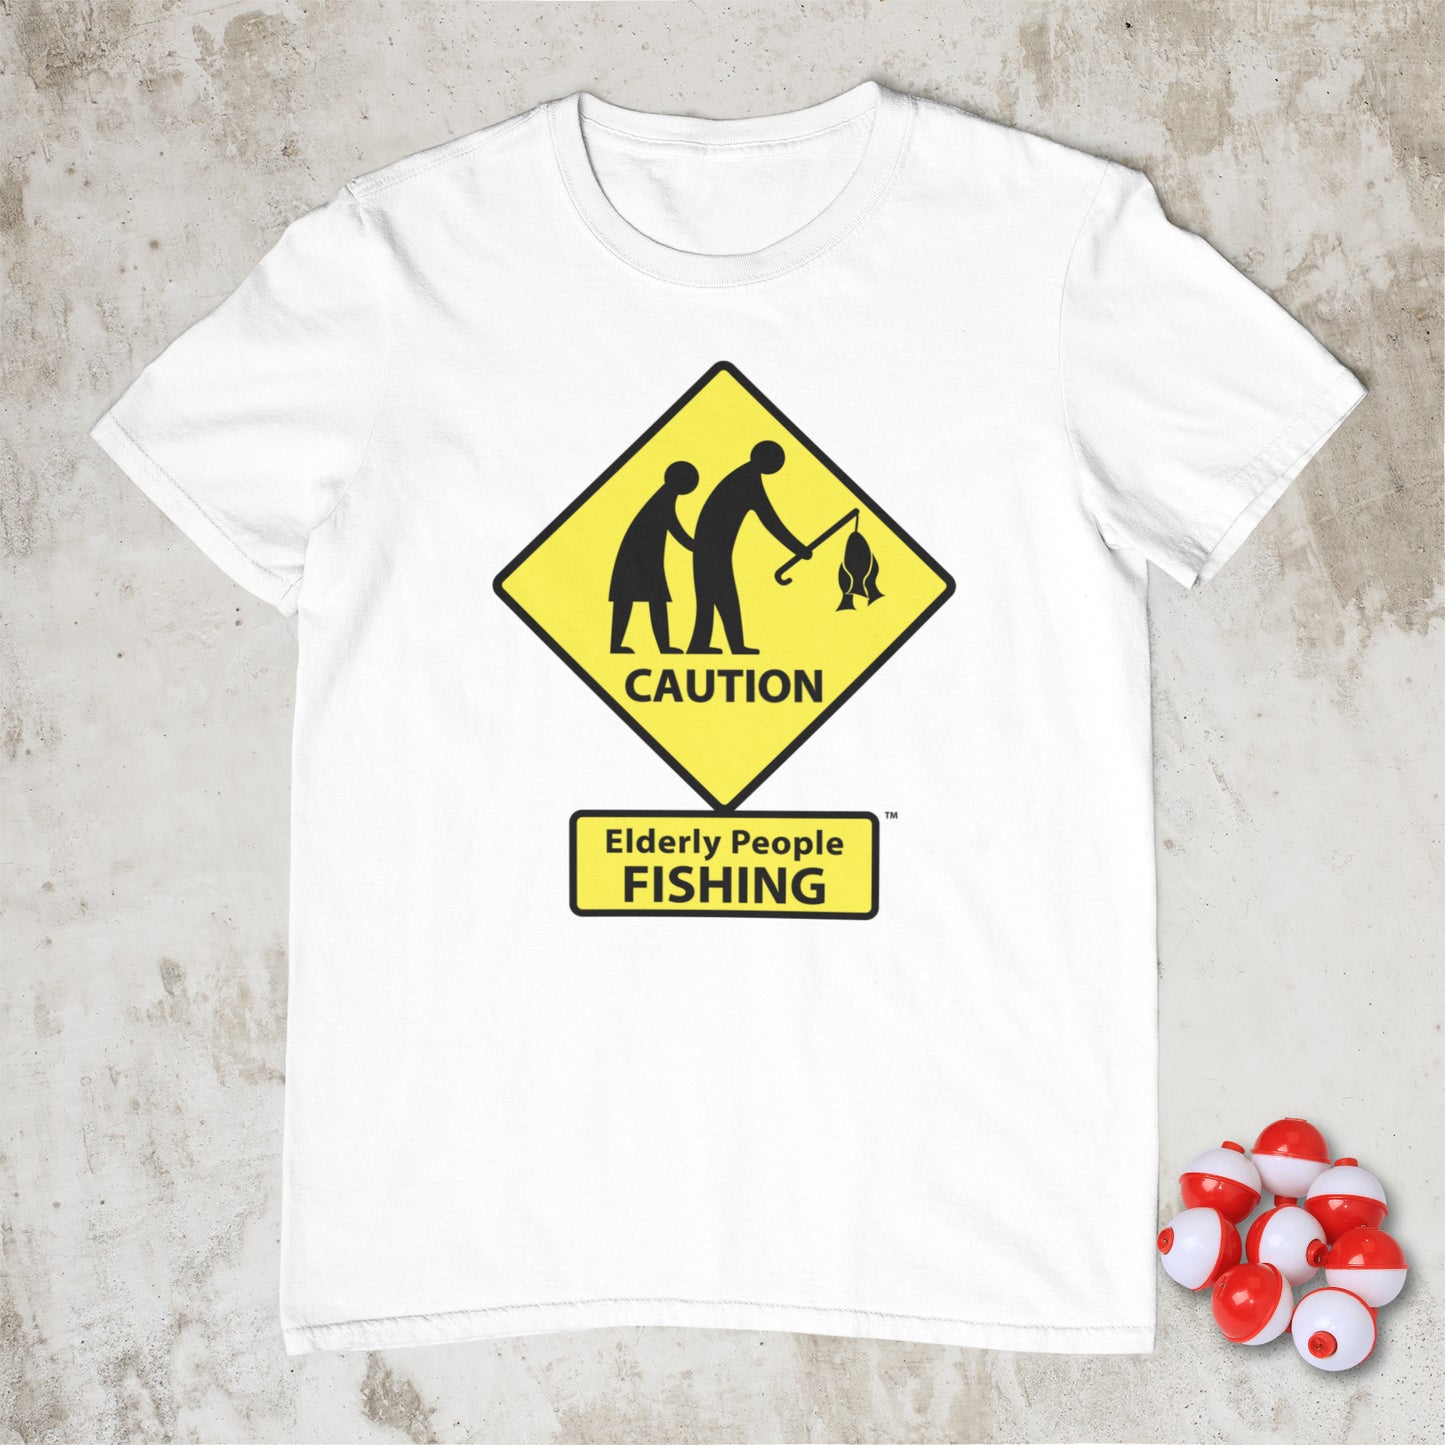 Caution: Elderly People FISHING T-shirt